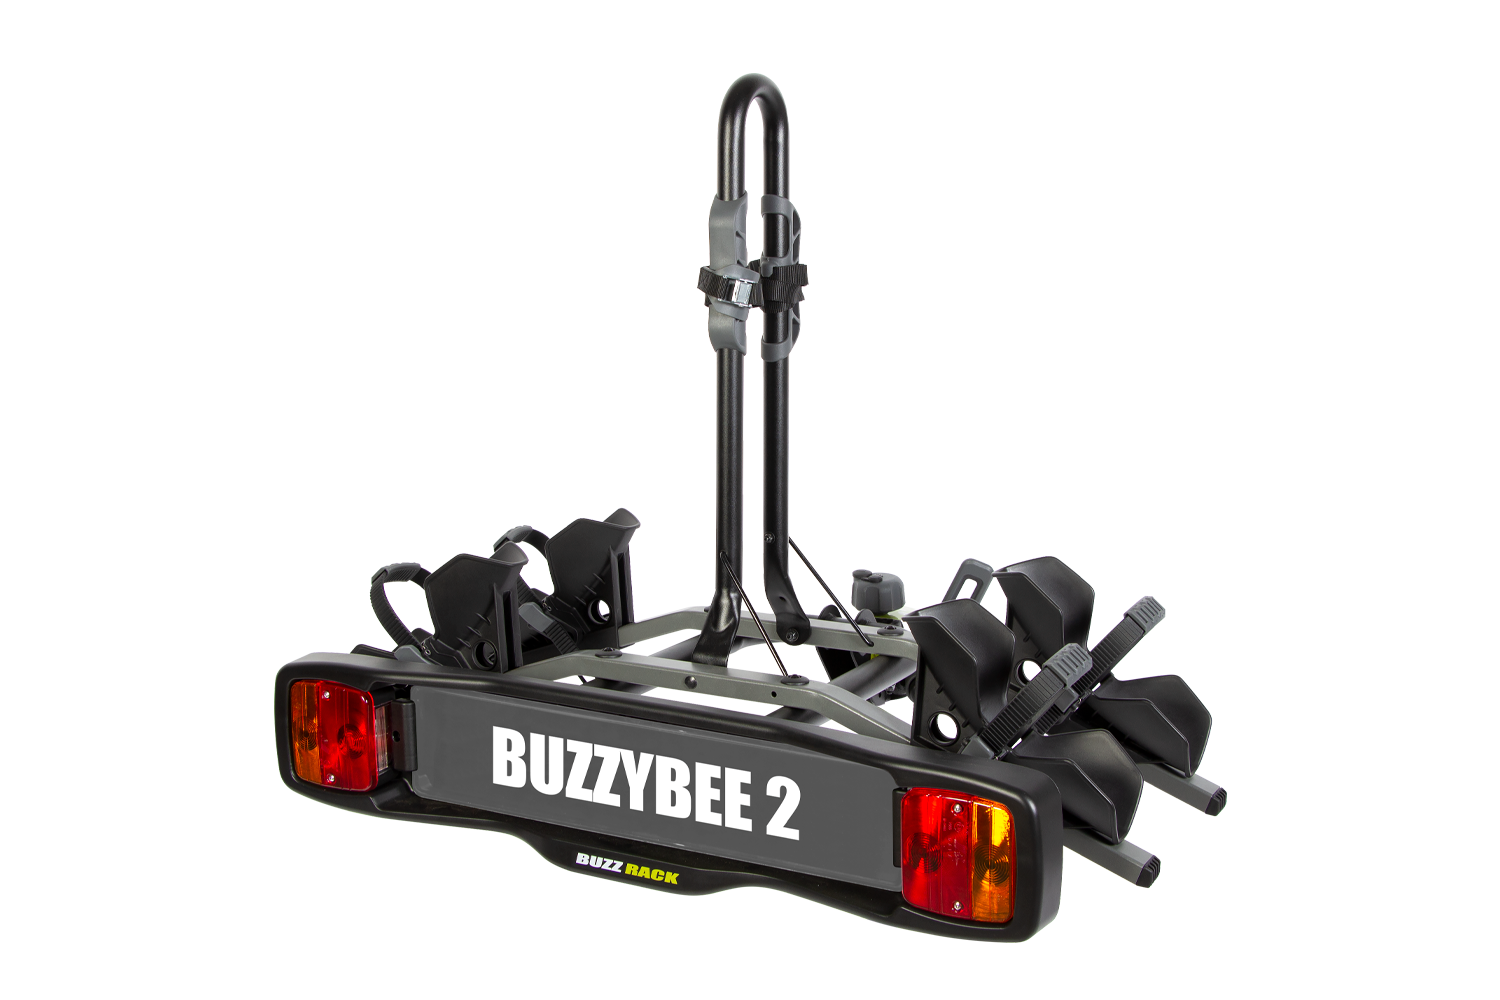 Buzzrack Buzzybee 2 (Tow Ball) 2 Bike Platform Rack - BR-2-BUZZYBEE